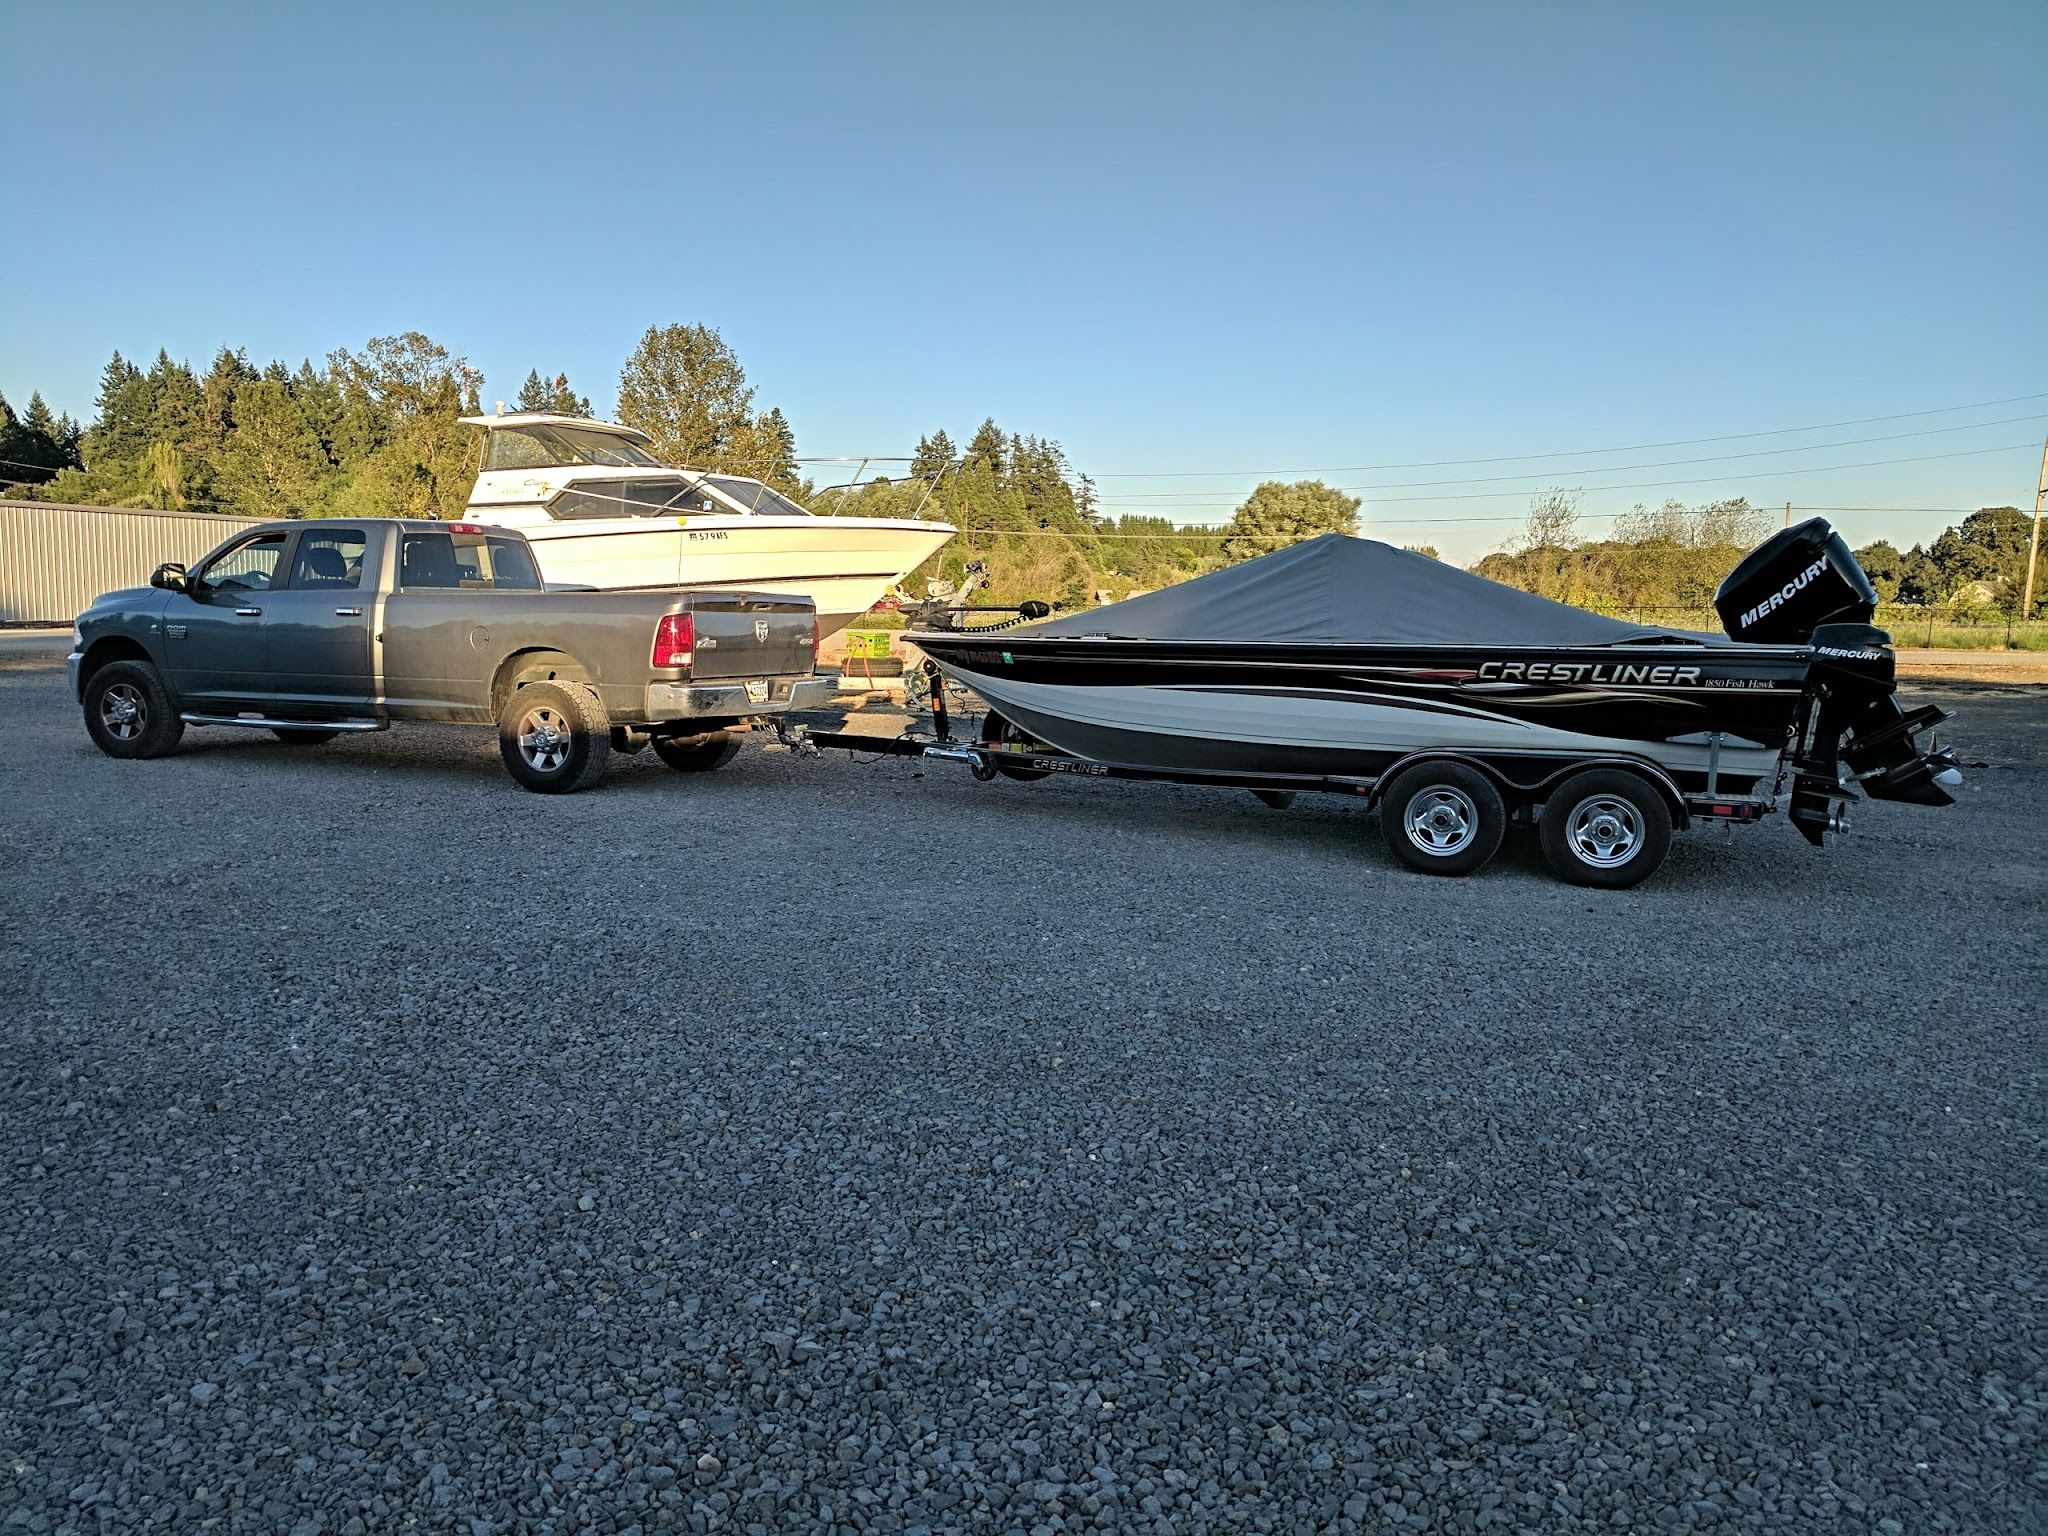 Newberg Boat and RV Storage